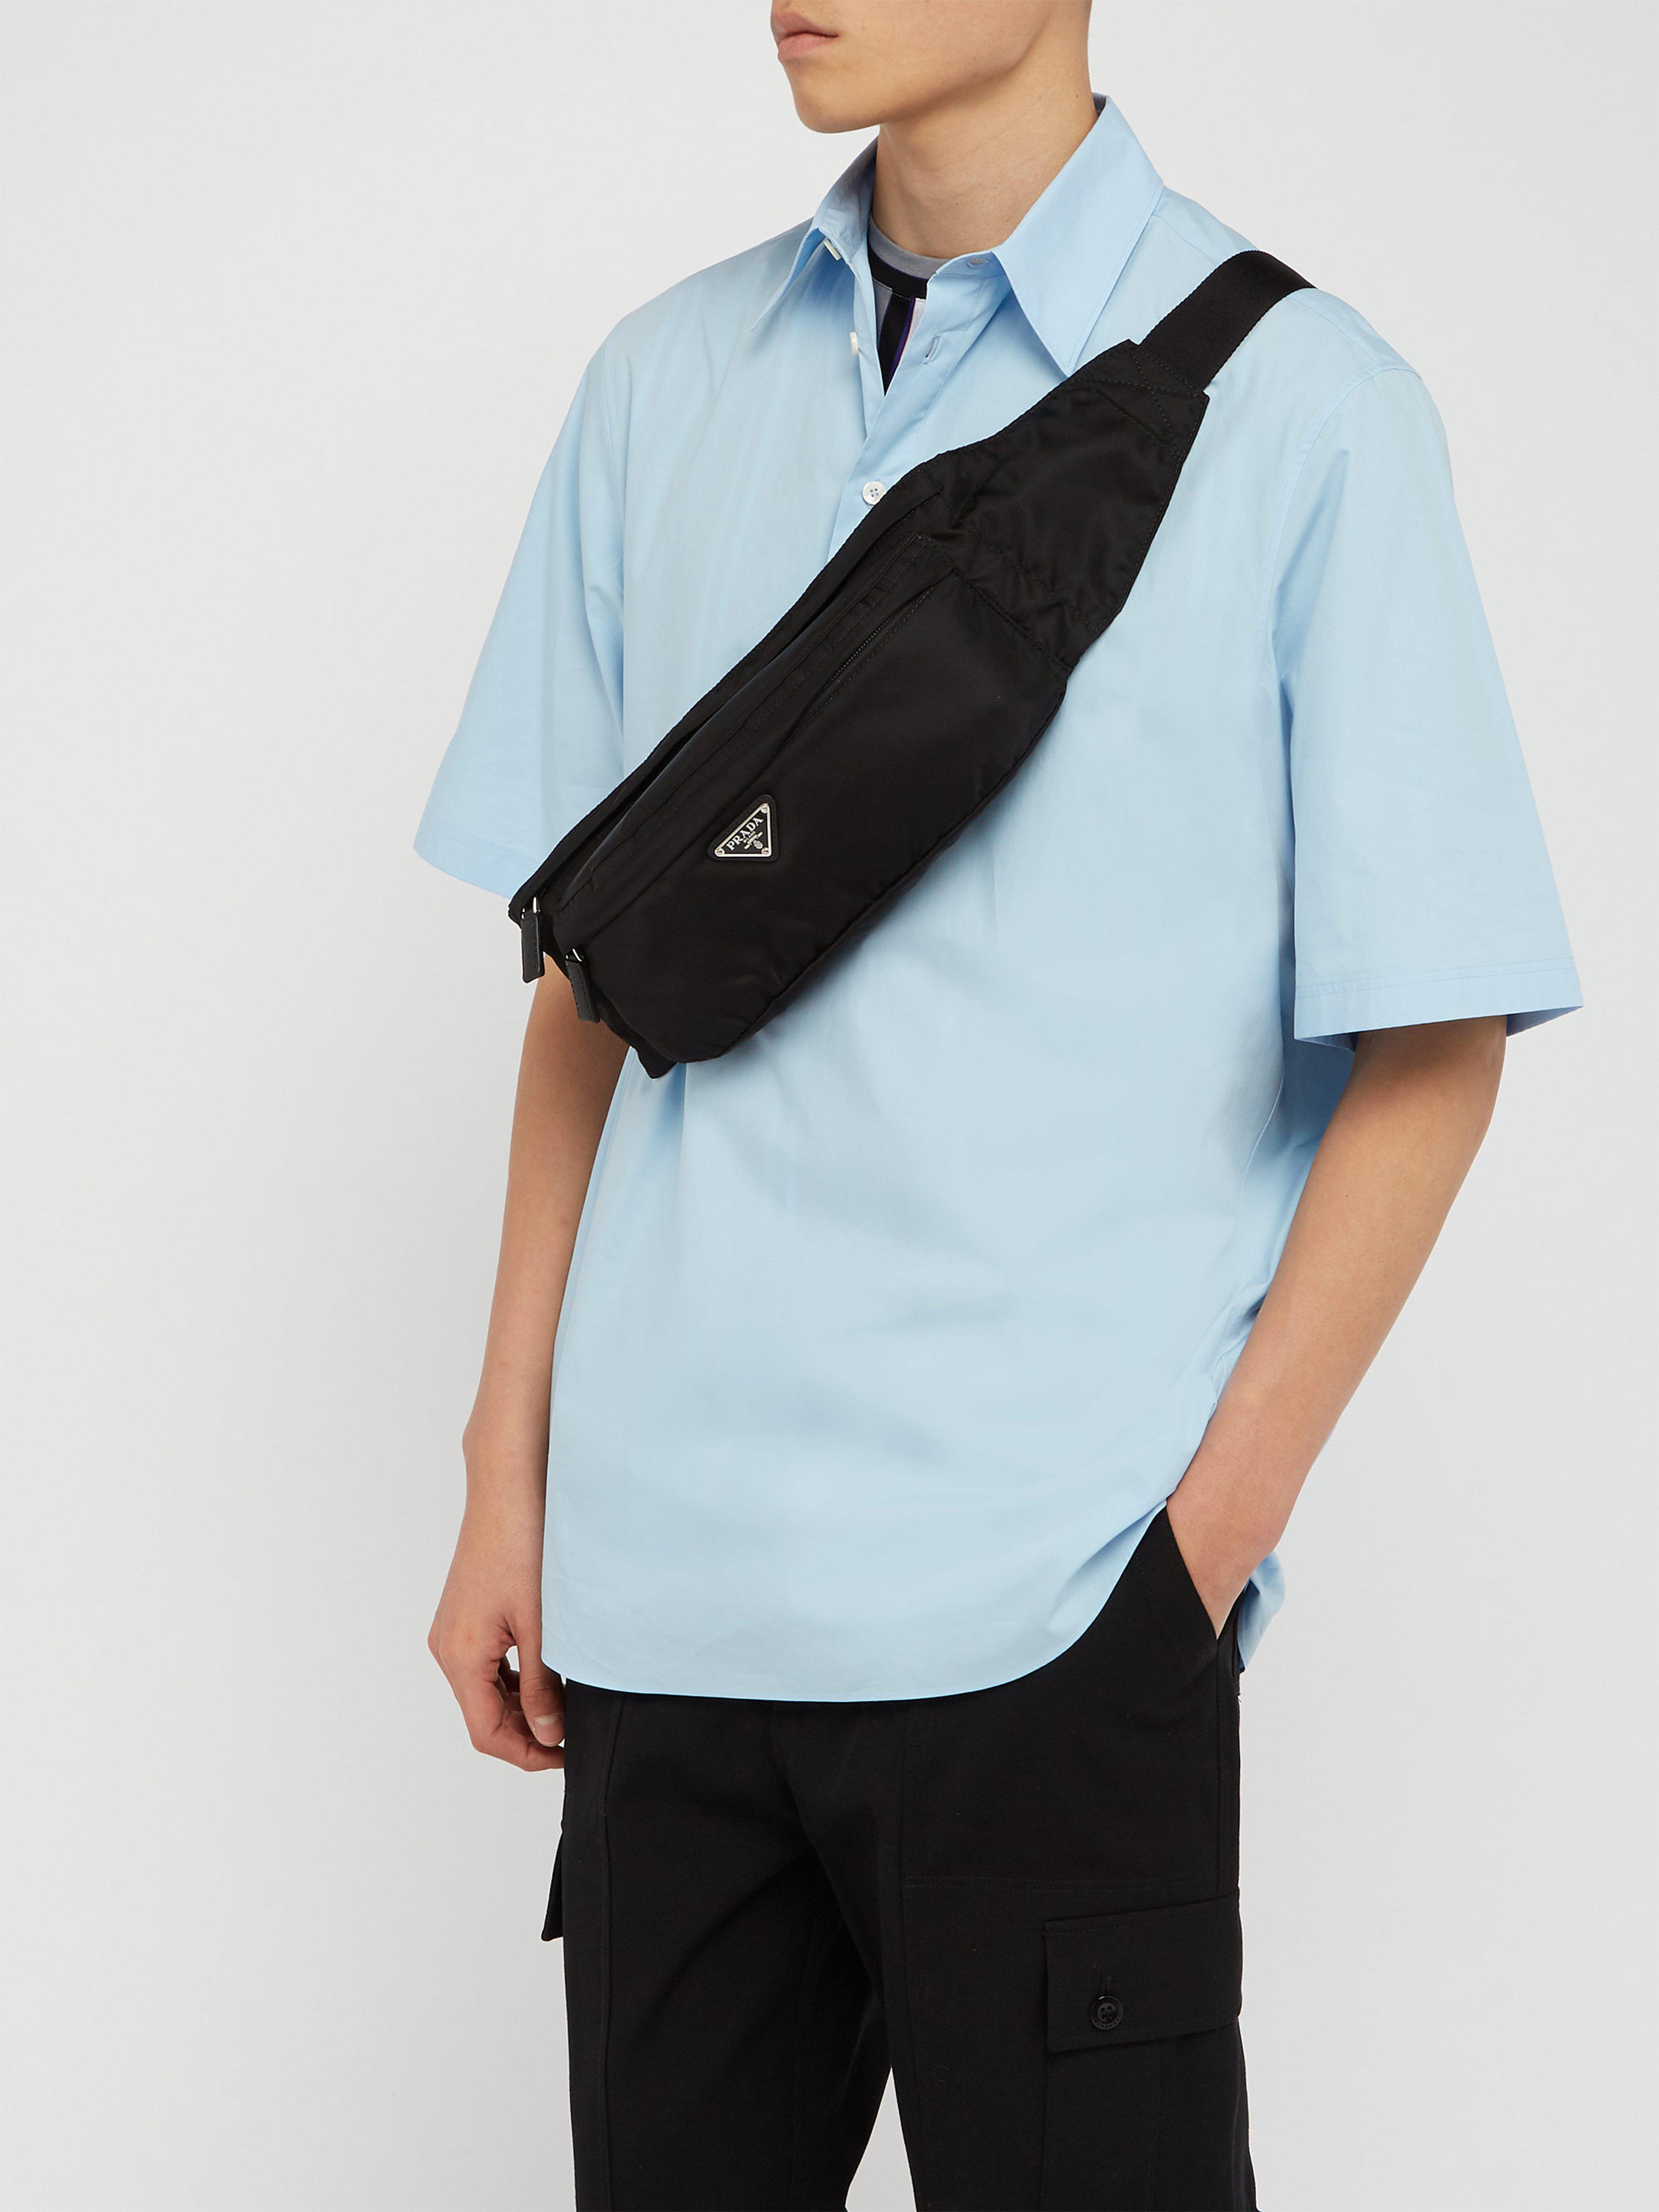 Prada Triangle Logo Belt Bag in Black for Men - Lyst